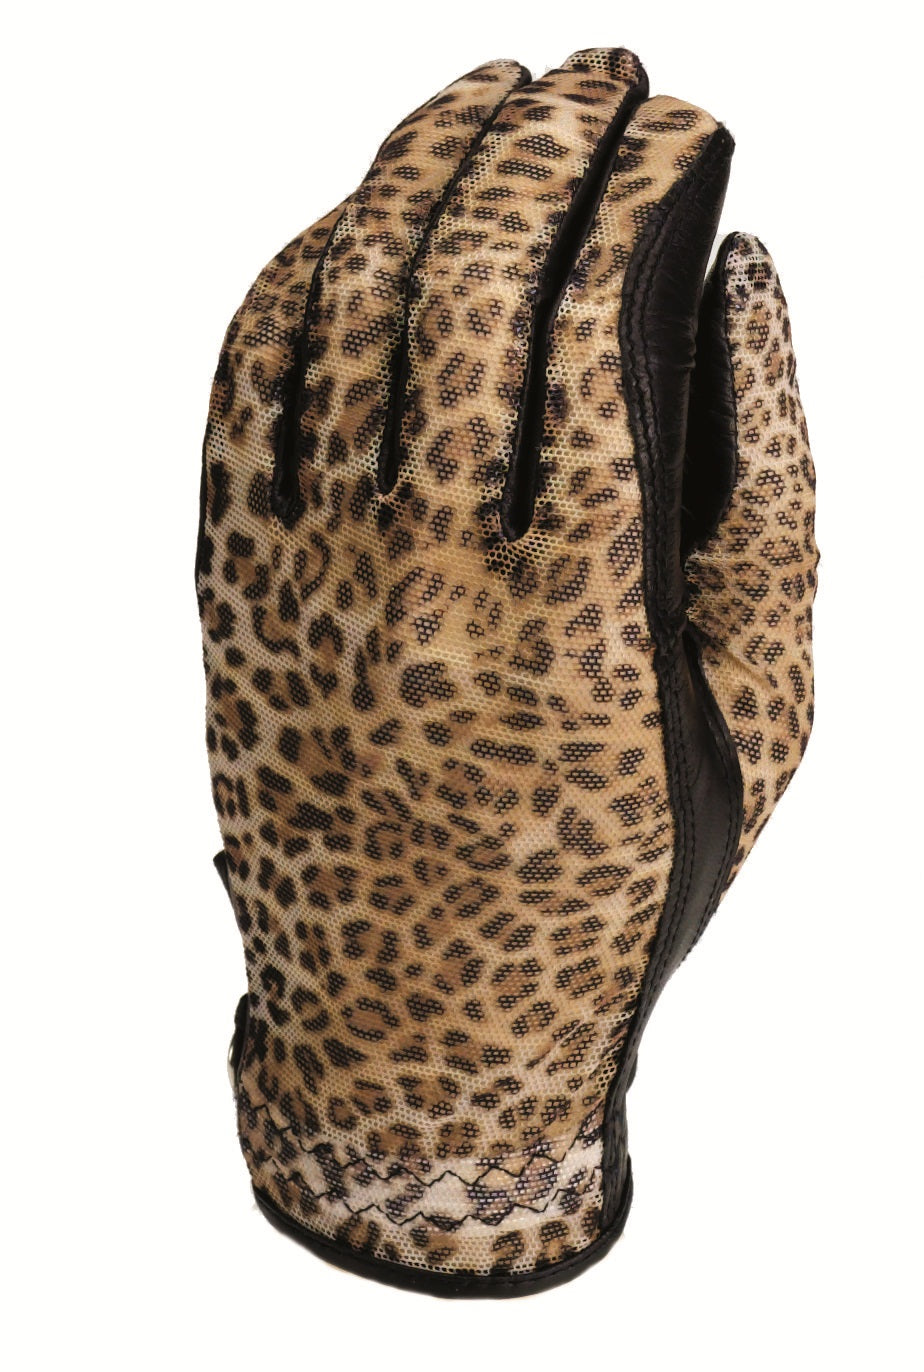 Evertan- Leopard Print Golf Glove (for LeftHand)